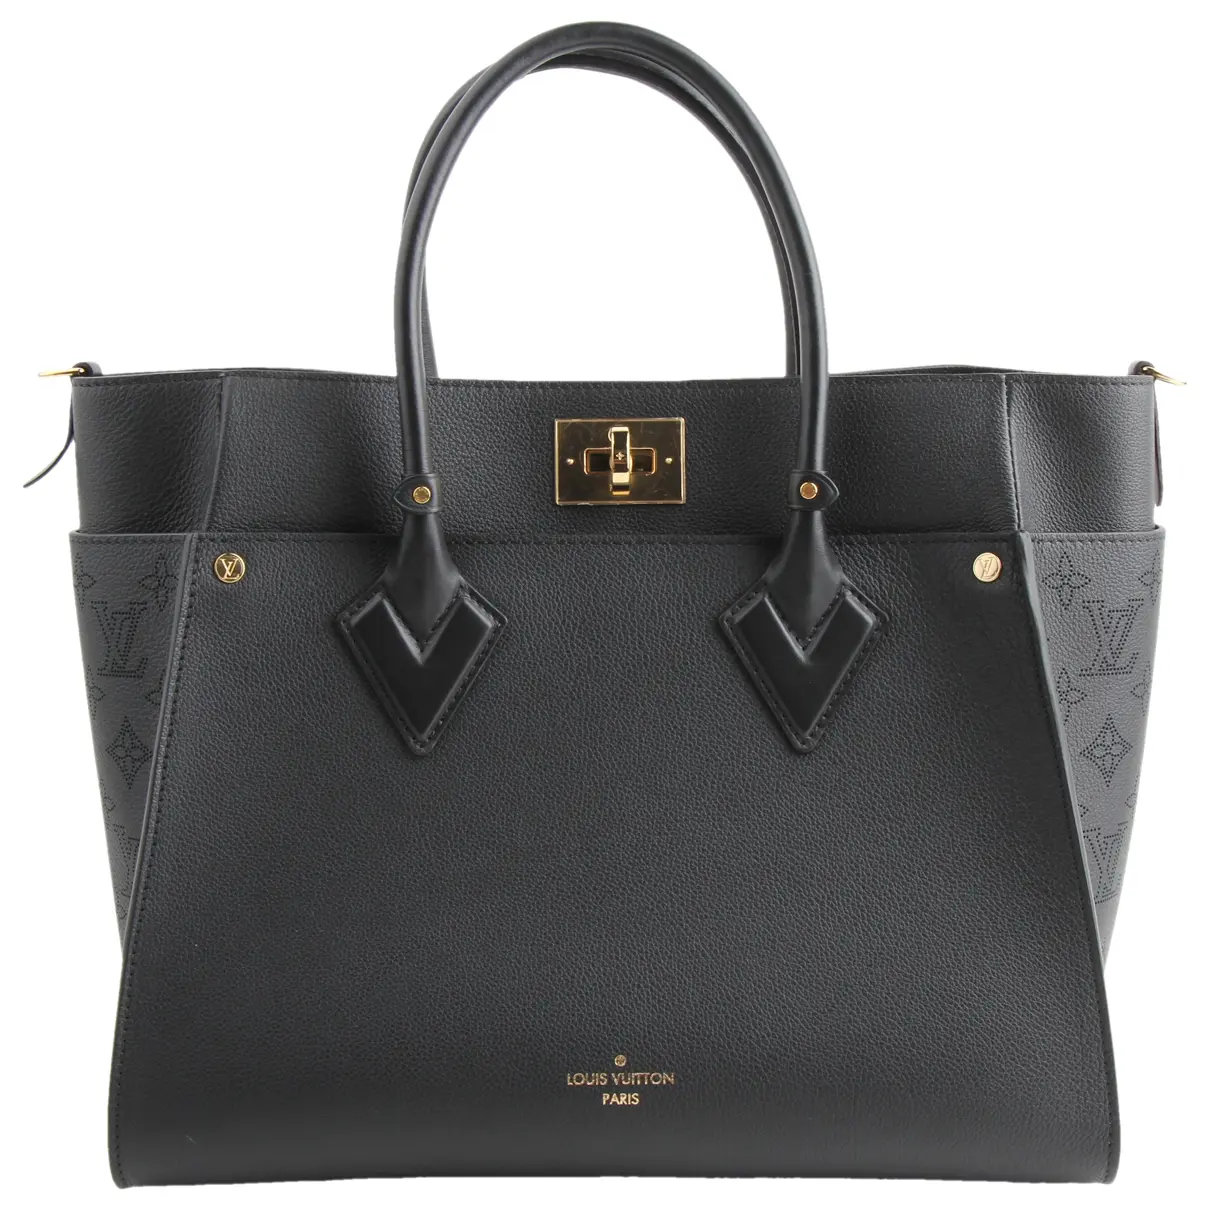 On My Side leather handbag Louis Vuitton